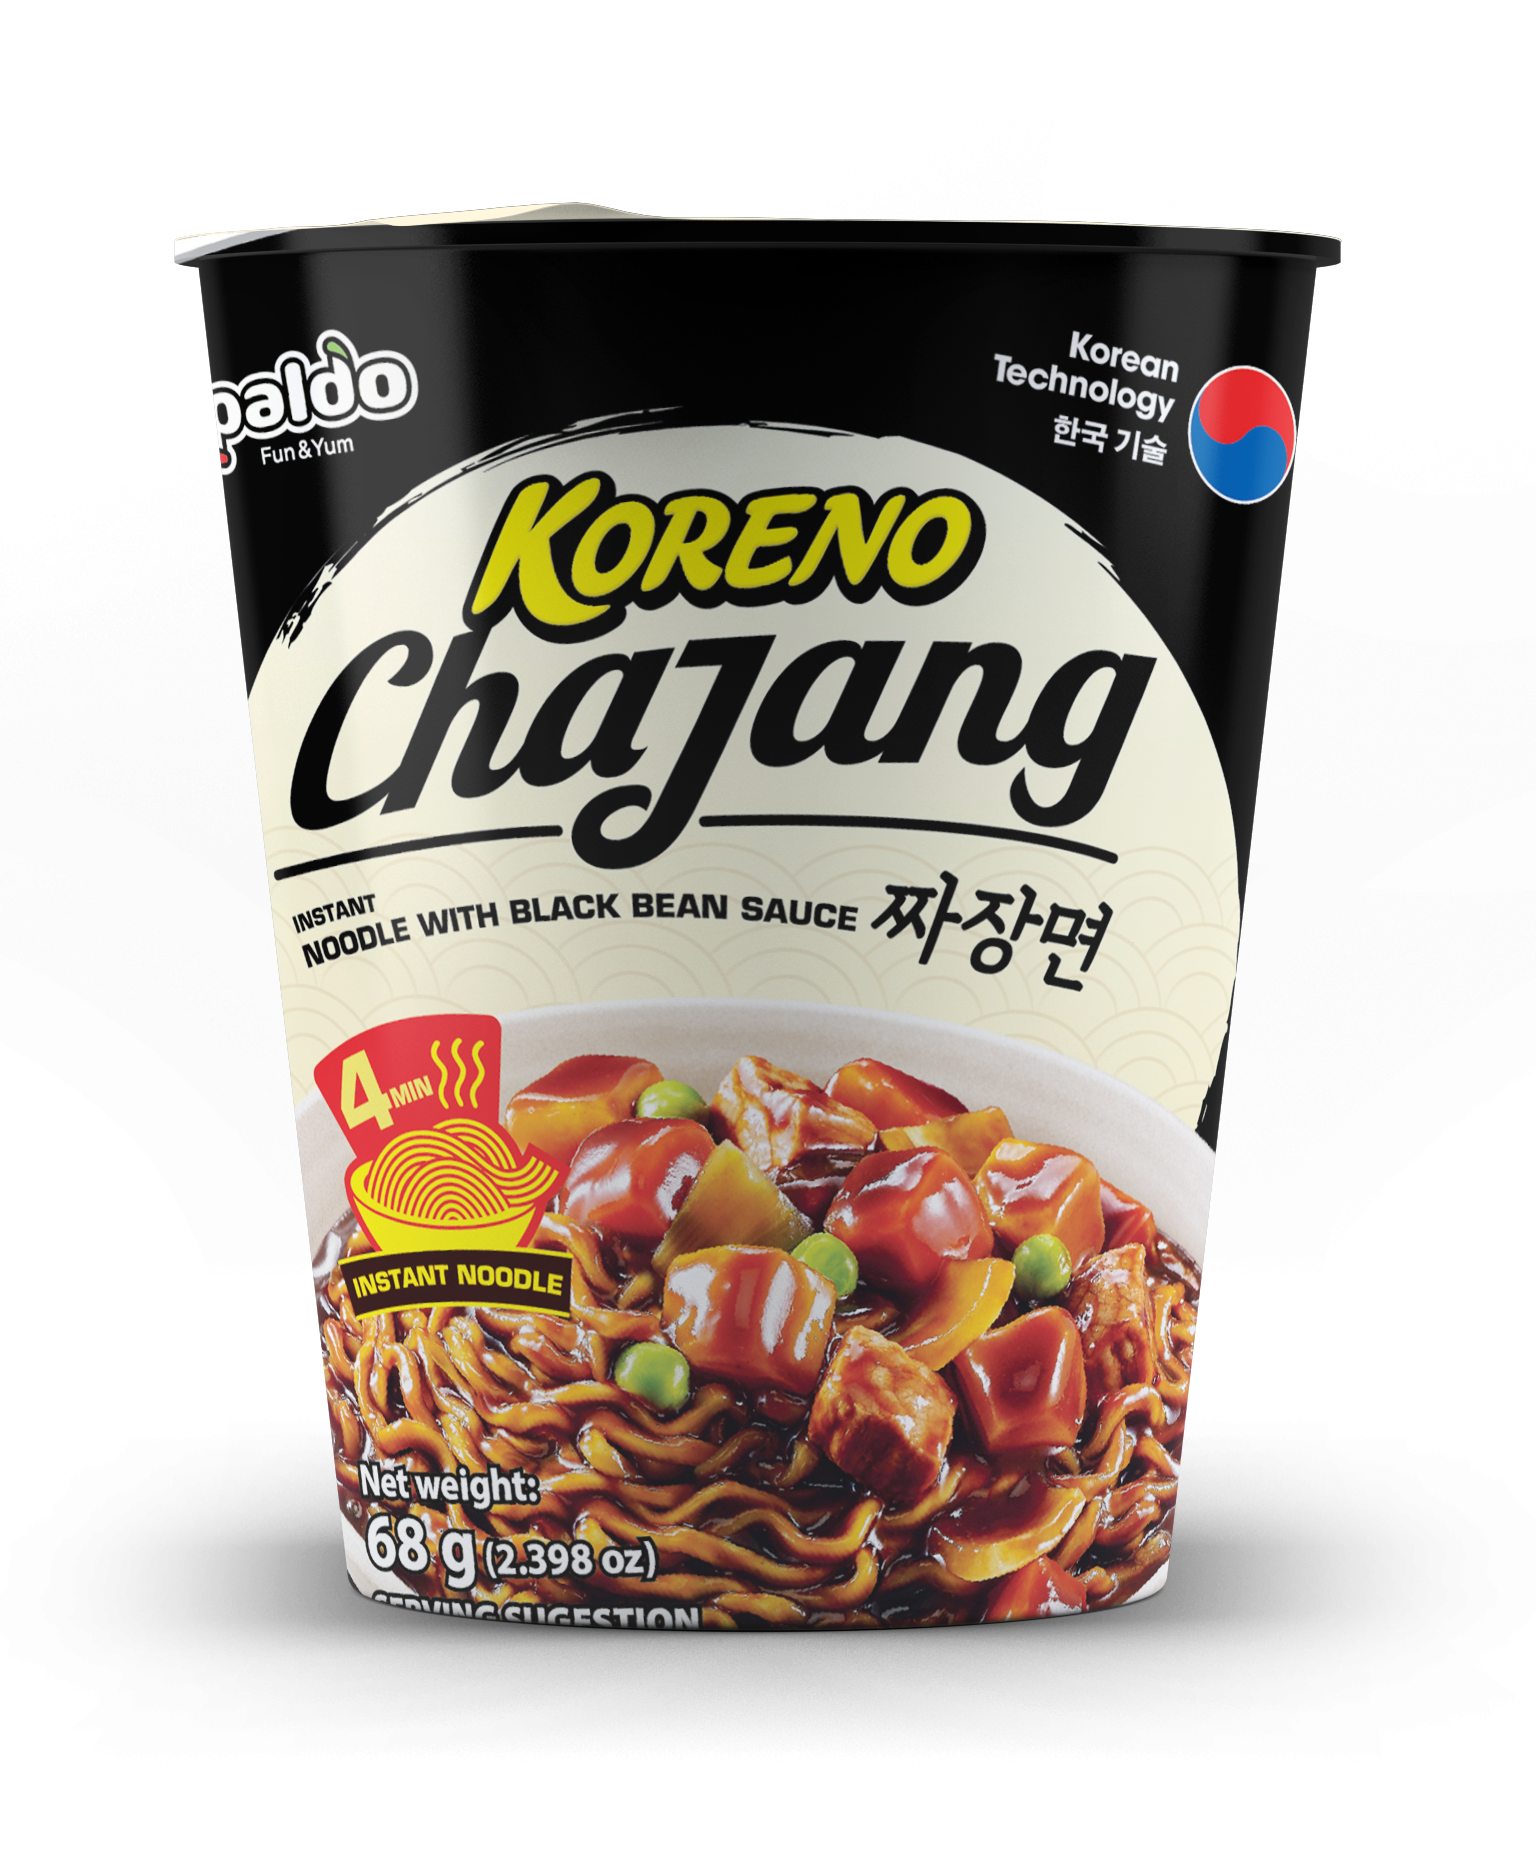 Paldo Koreno Black Bean Sauce (Chajang) Instant Noodle Cup, 65g, 24 Pack